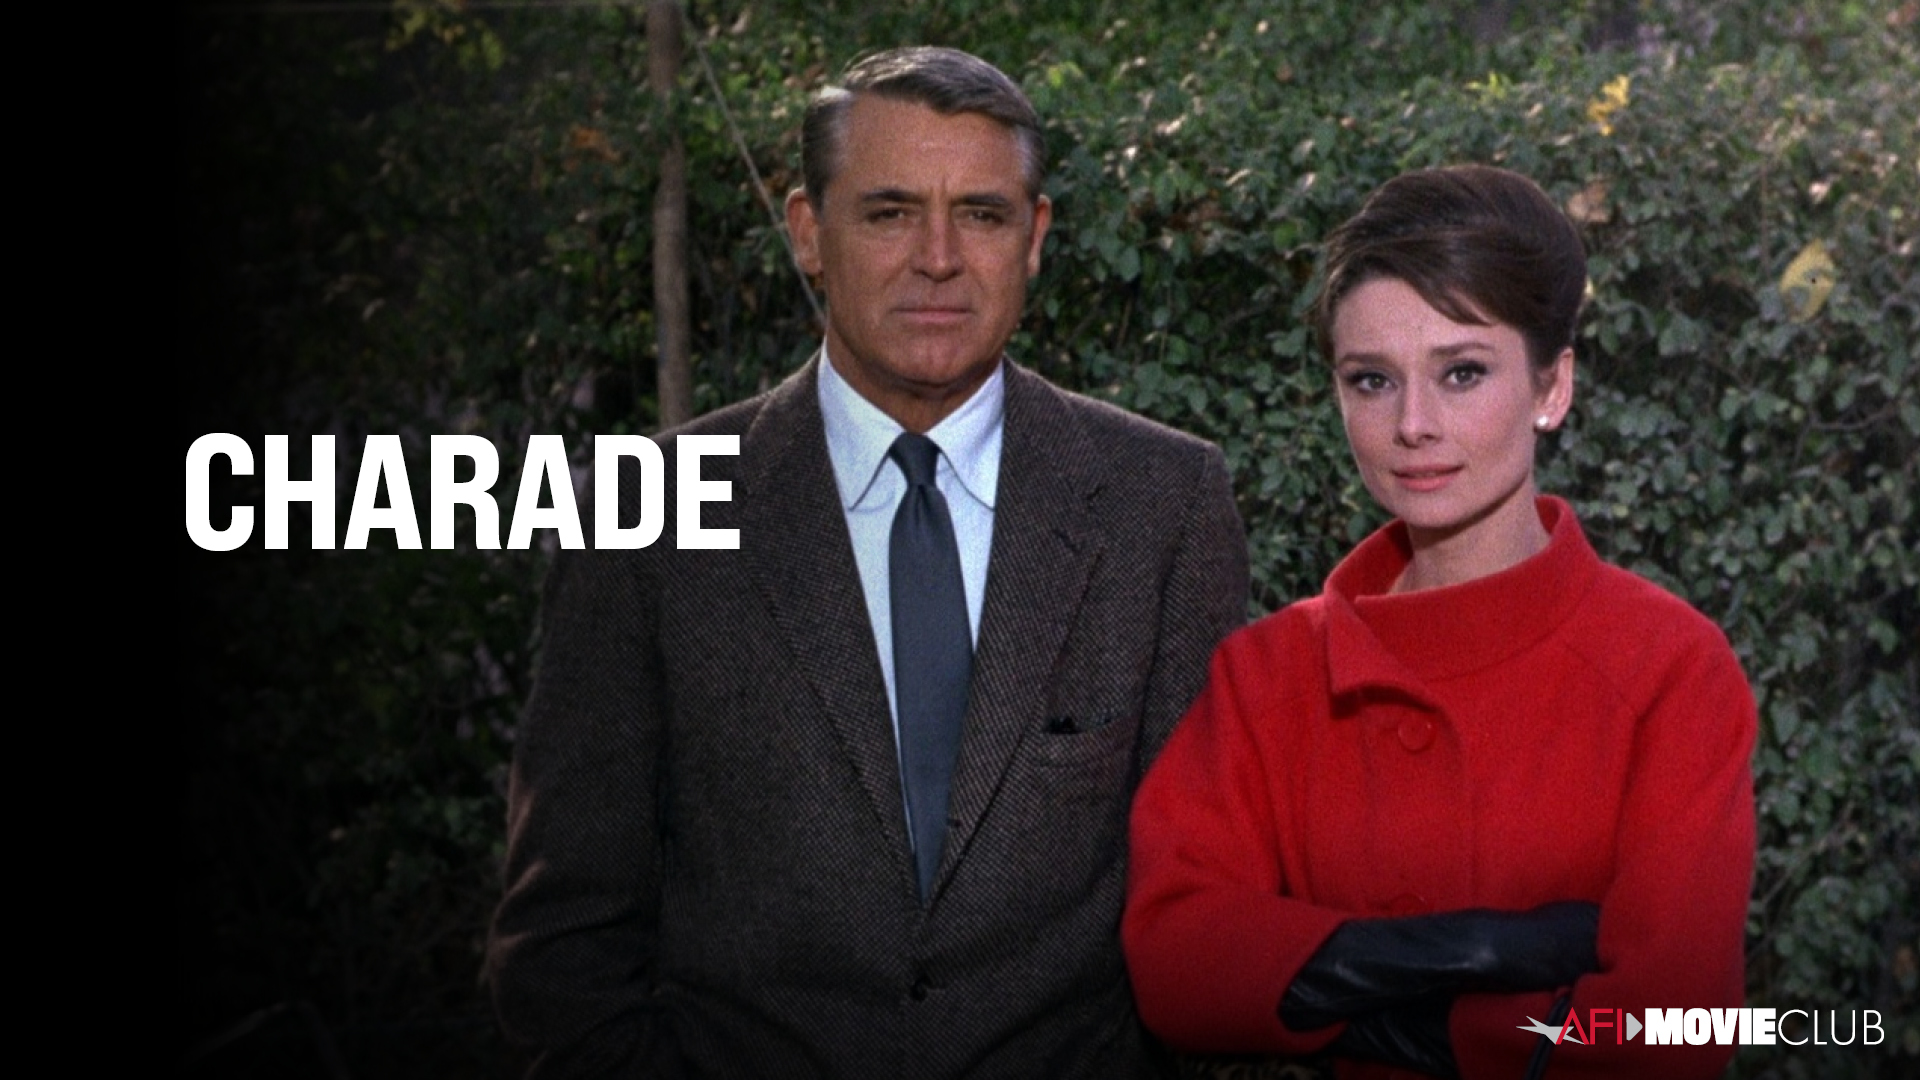 Charade Film Still - Cary Grant and Audrey Hepburn